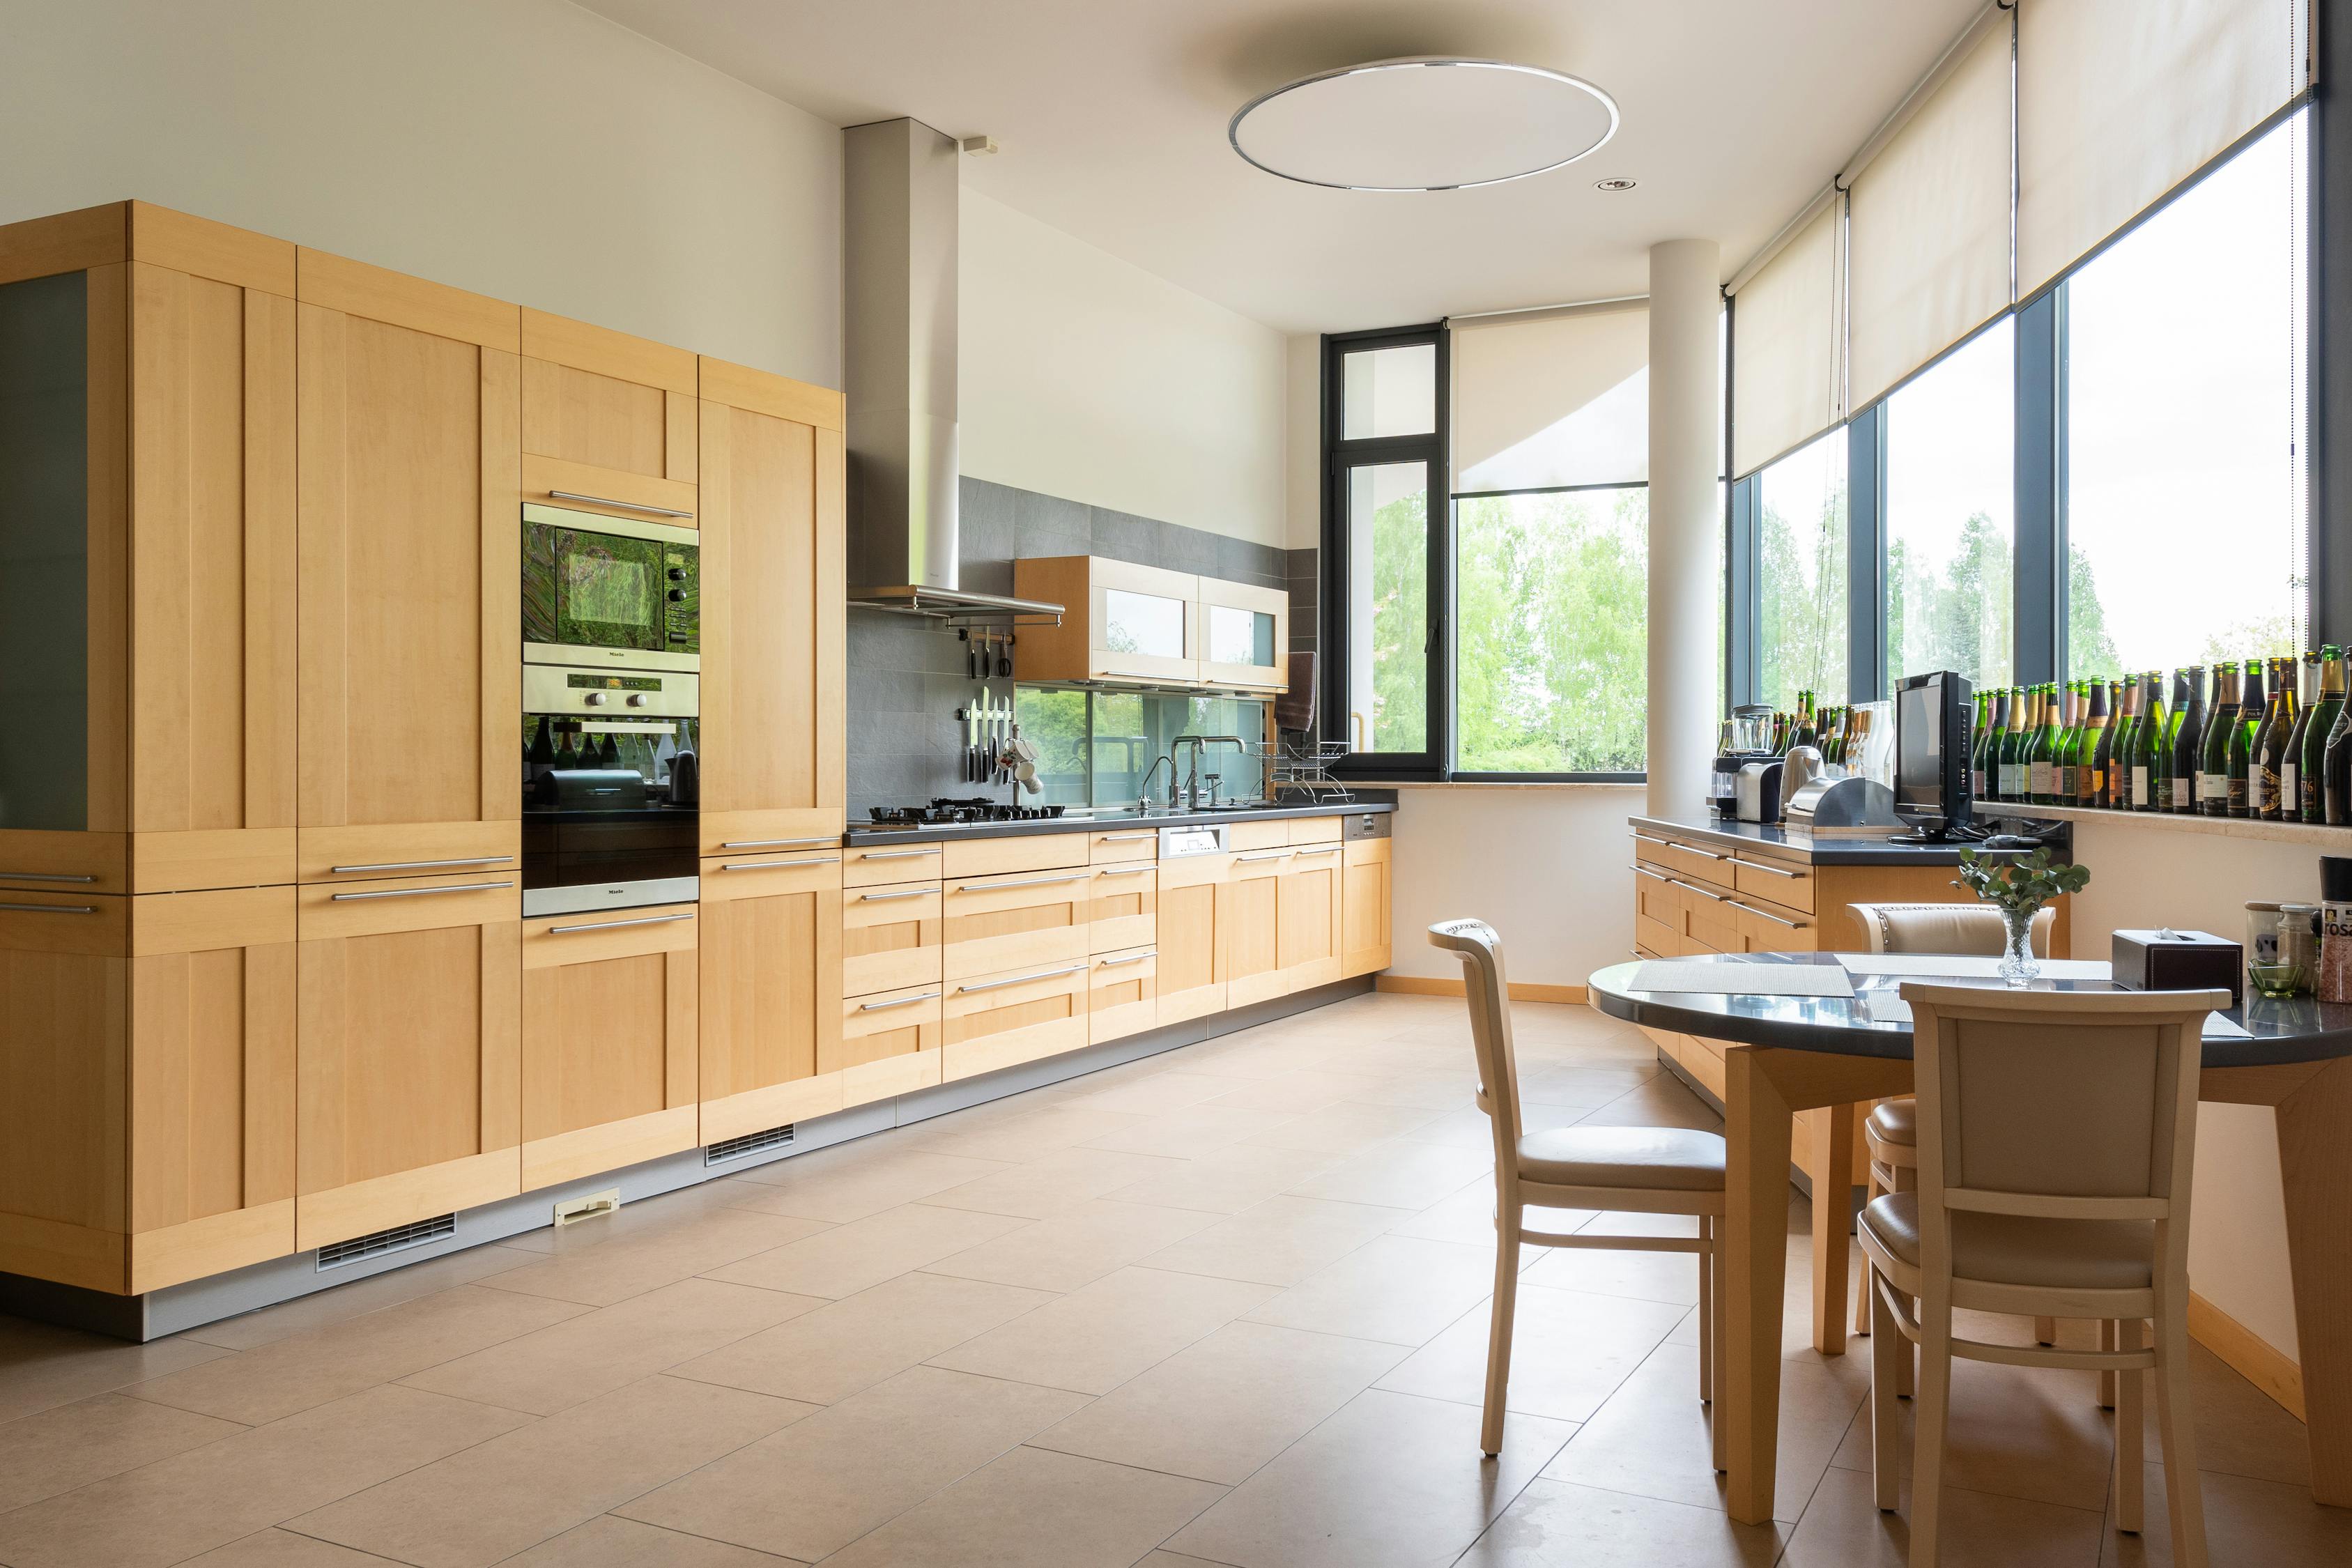 Interior of modern kitchen with window · Free Stock Photo